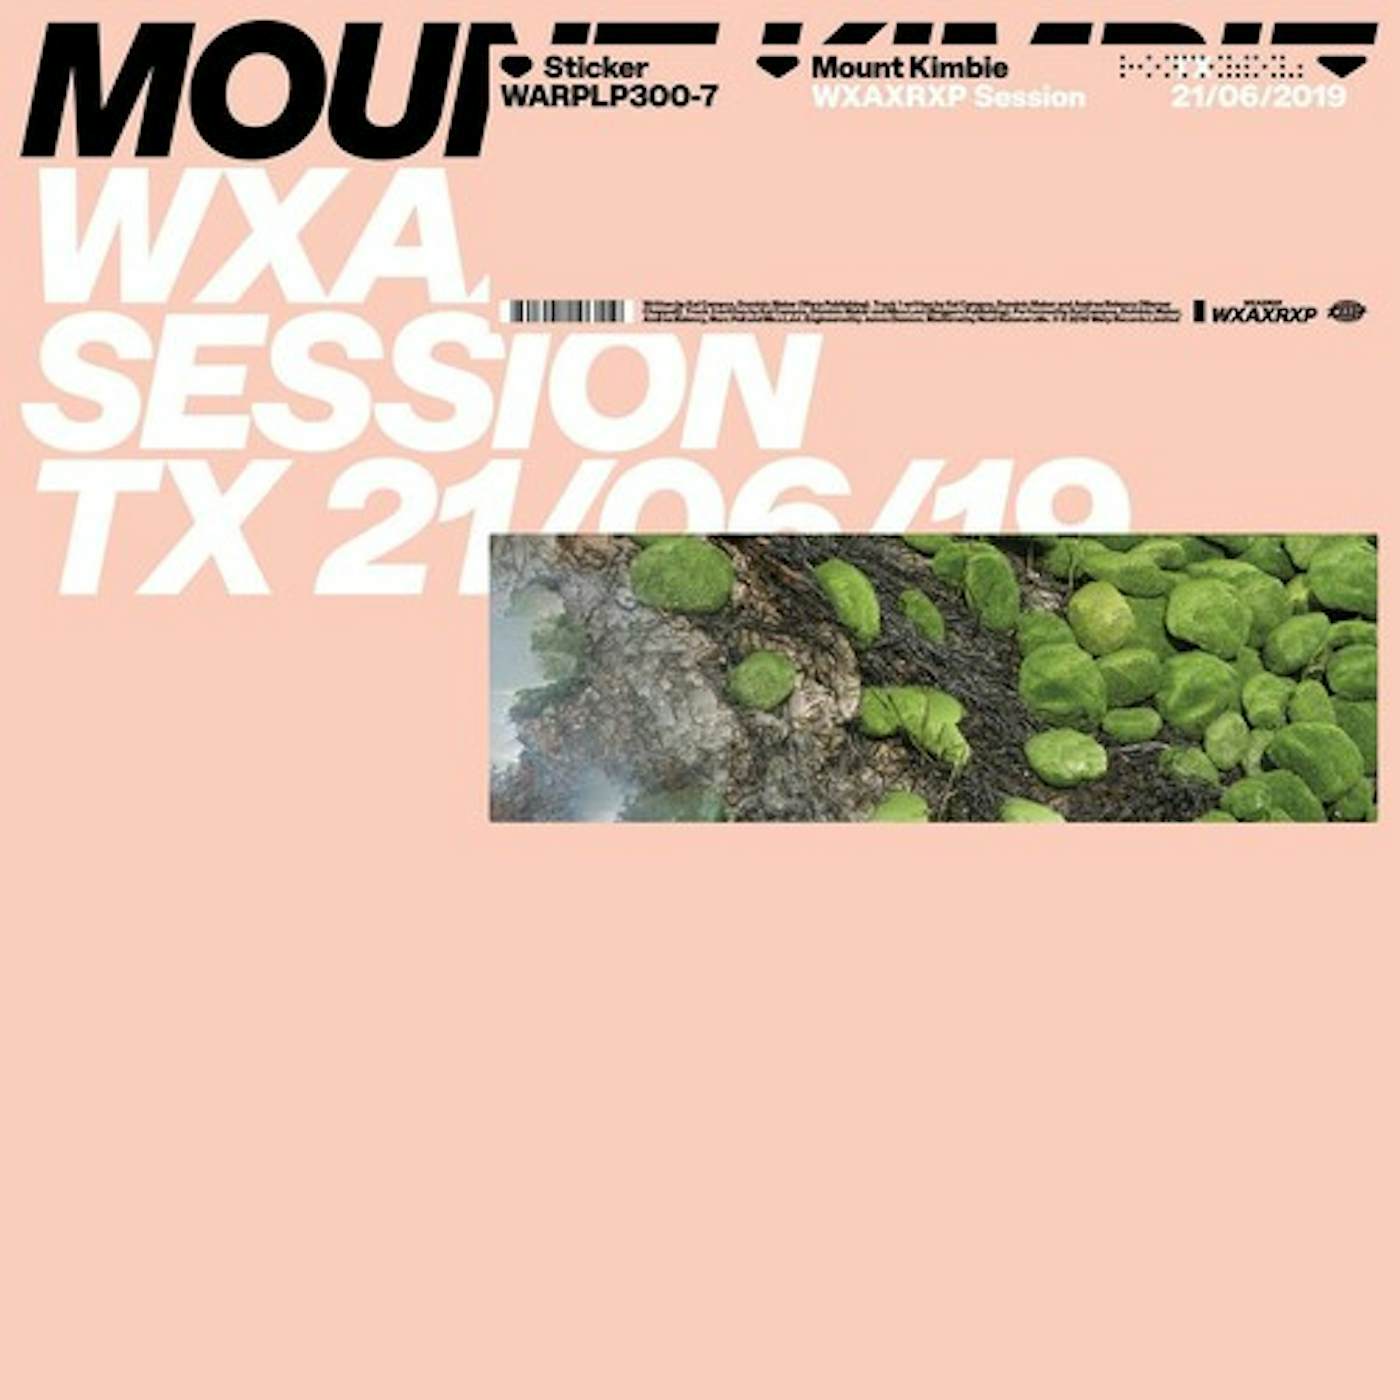 Mount Kimbie WXAXRXP Session Vinyl Record